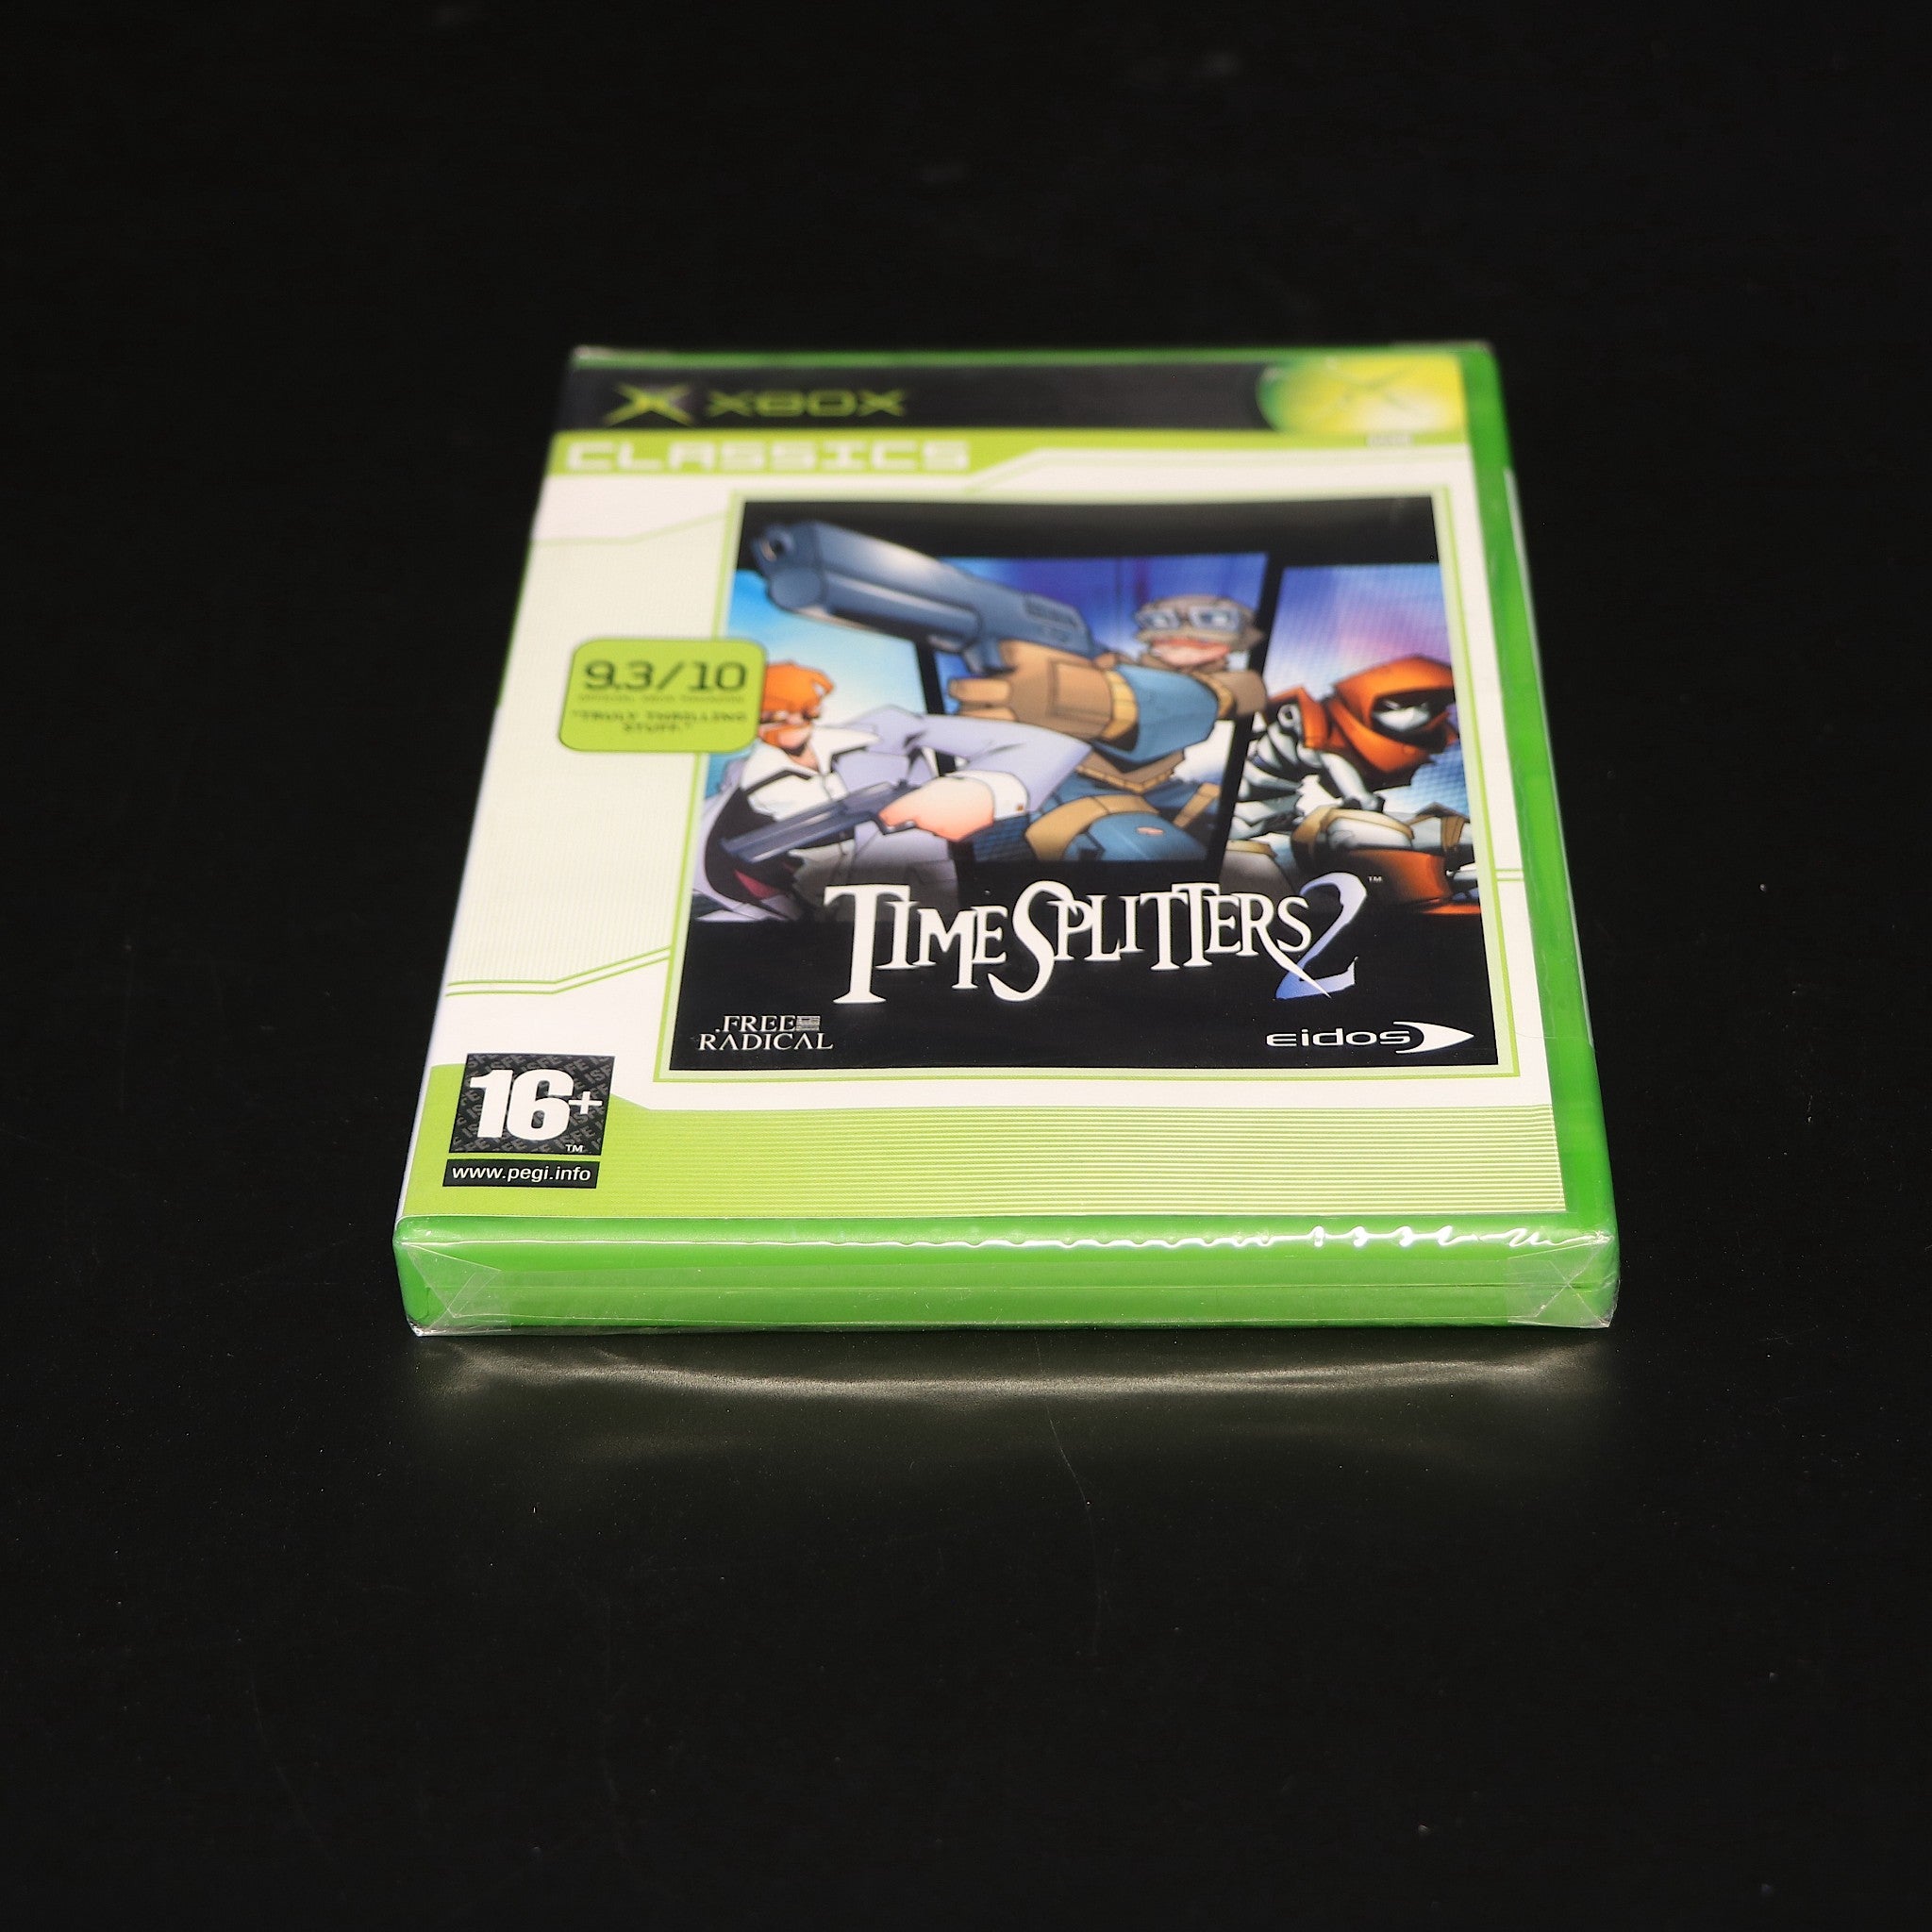 Timesplitters 2 | Original Microsoft Xbox Game | New & Sealed